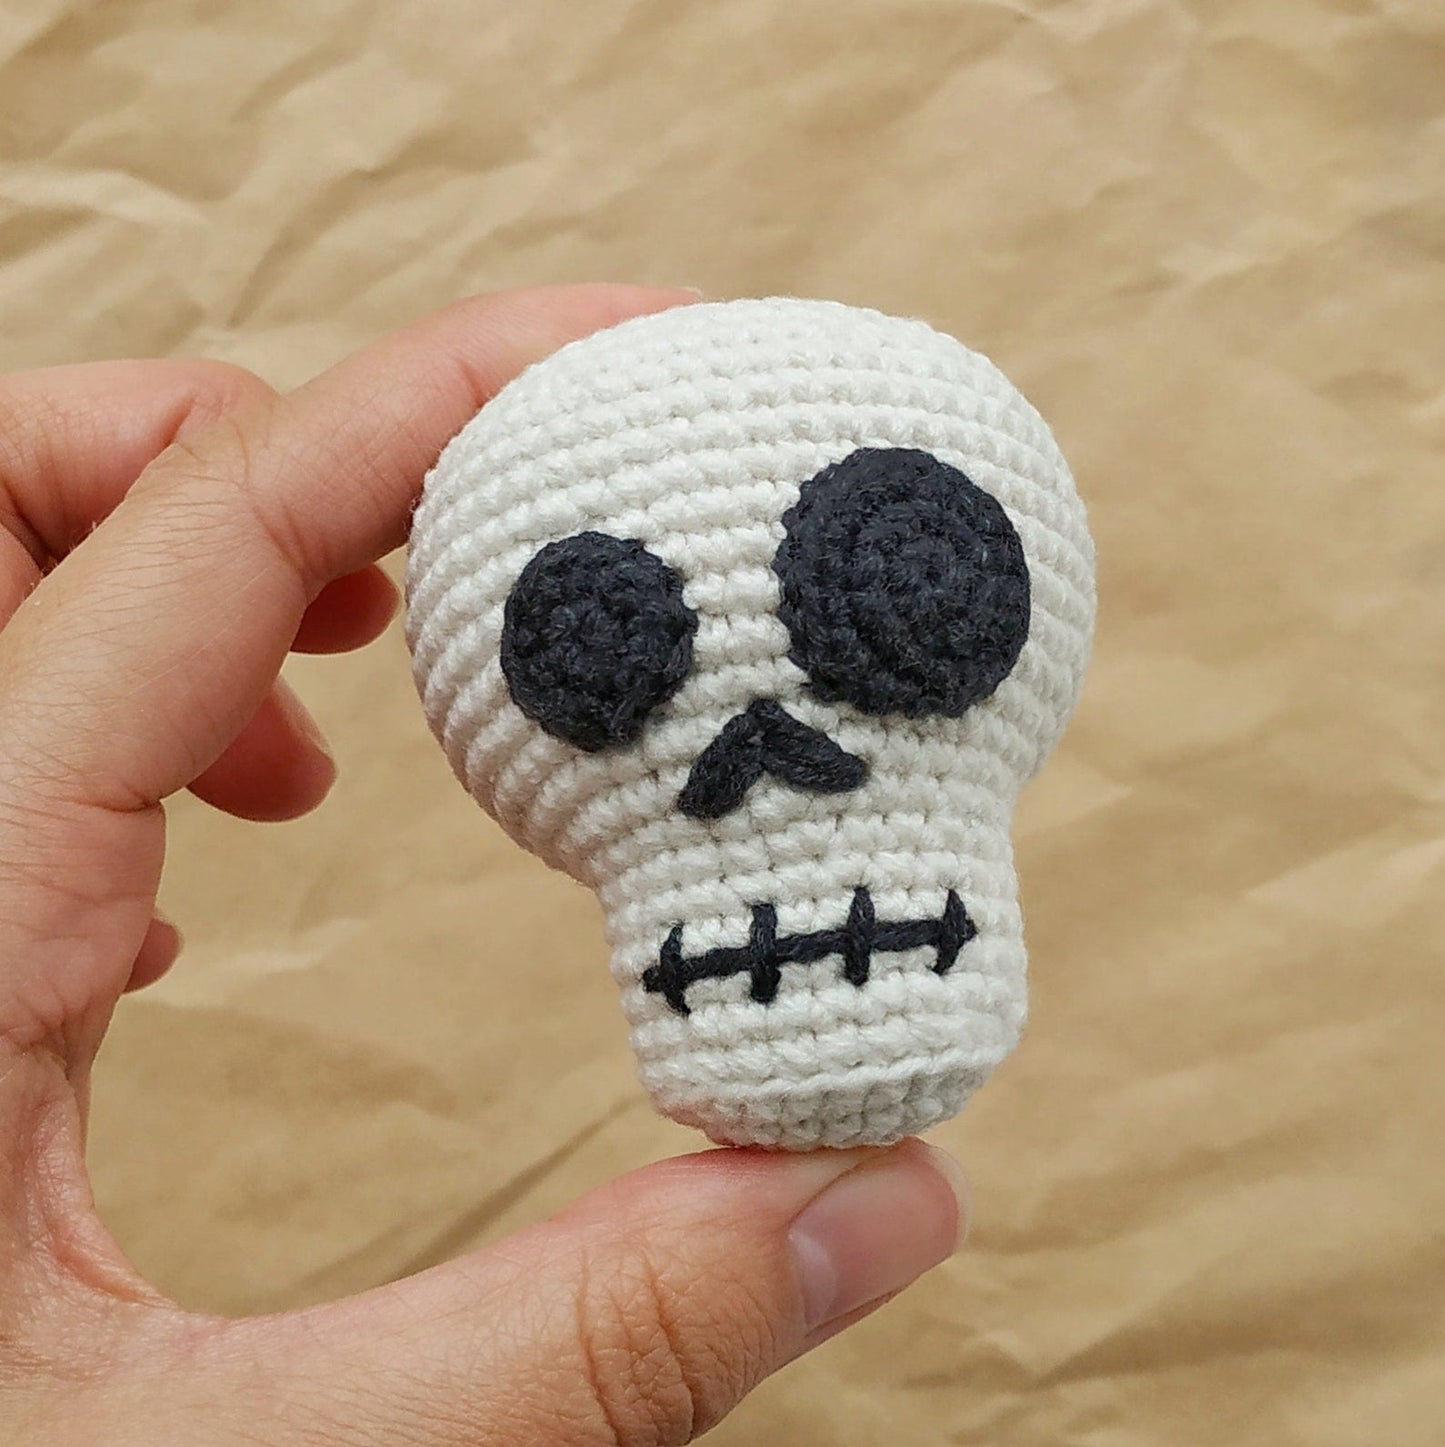 Skull Keychain Crochet Pattern